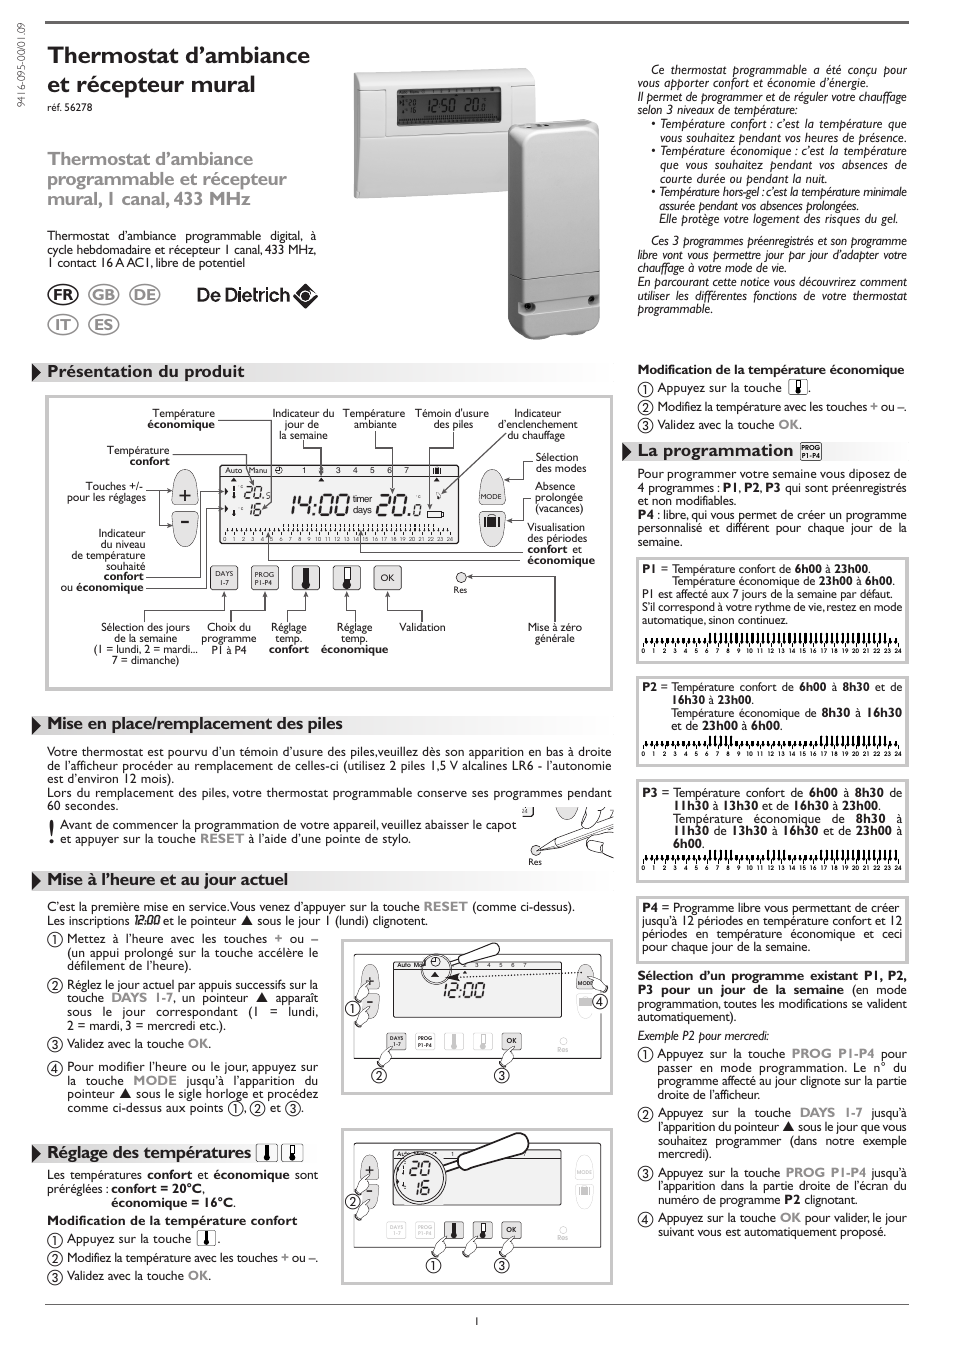 DE DIETRICH AD248 thermostat User Manual | 20 pages | Original mode